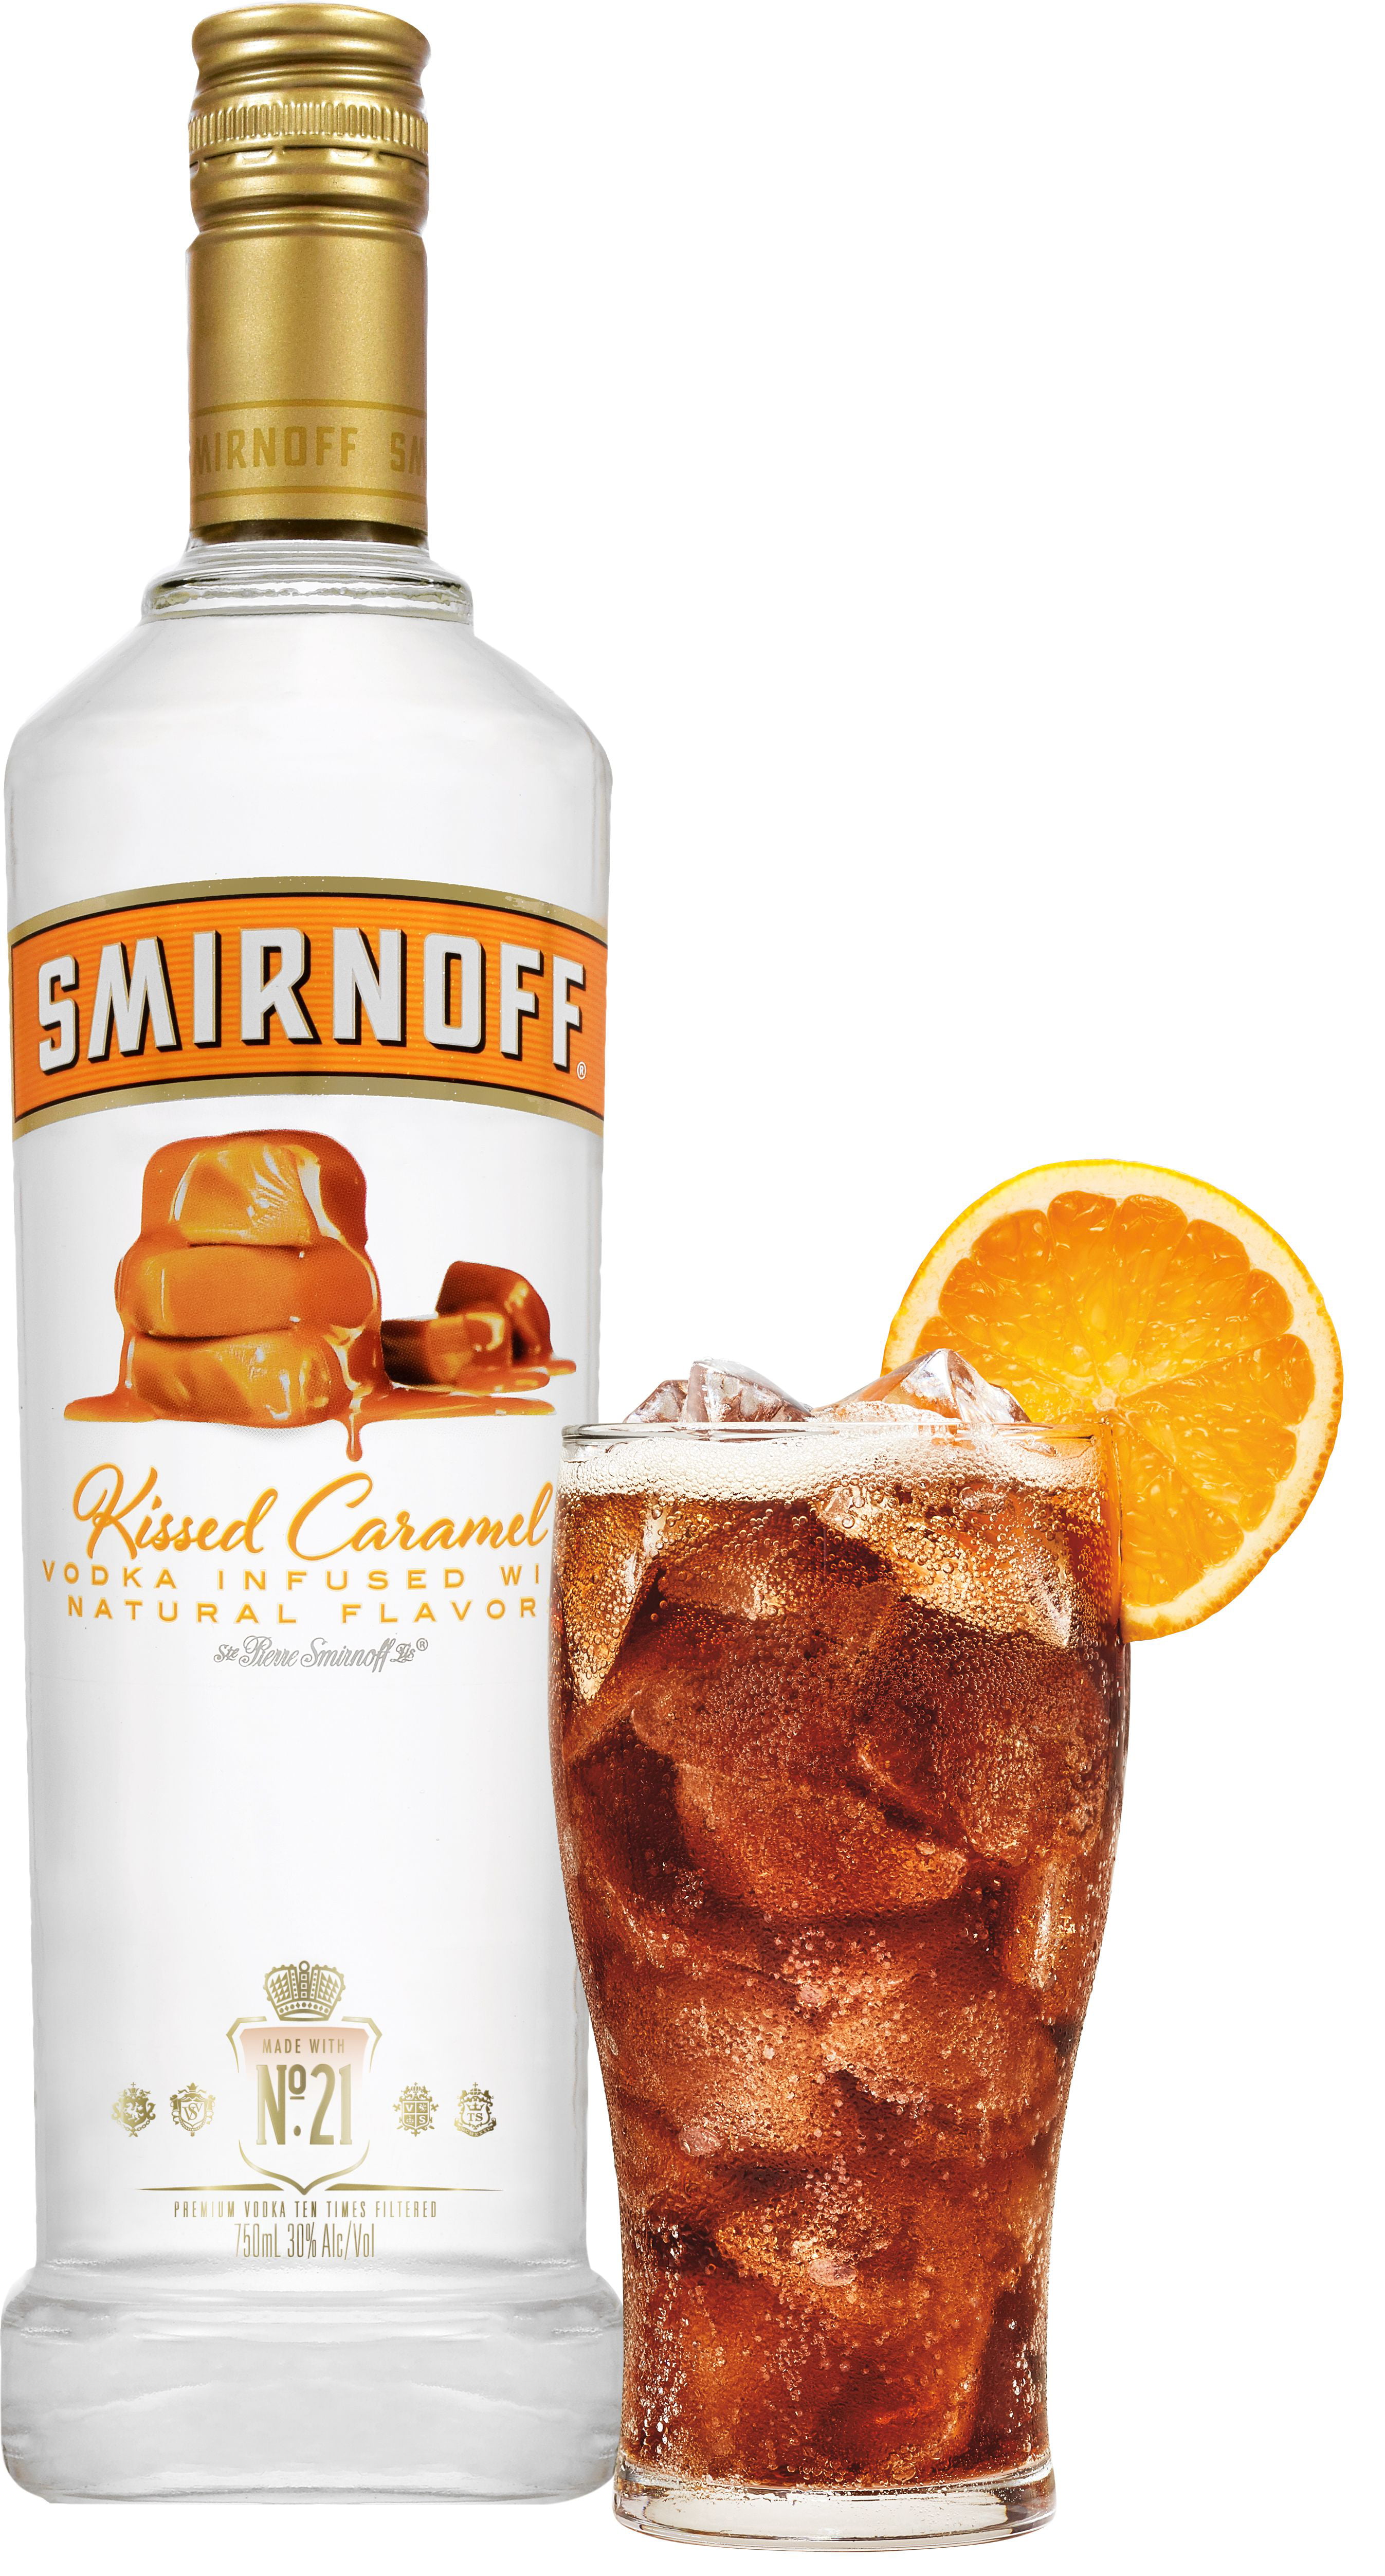 Drink Recipes With Smirnoff Kissed Caramel Vodka | Dandk Organizer